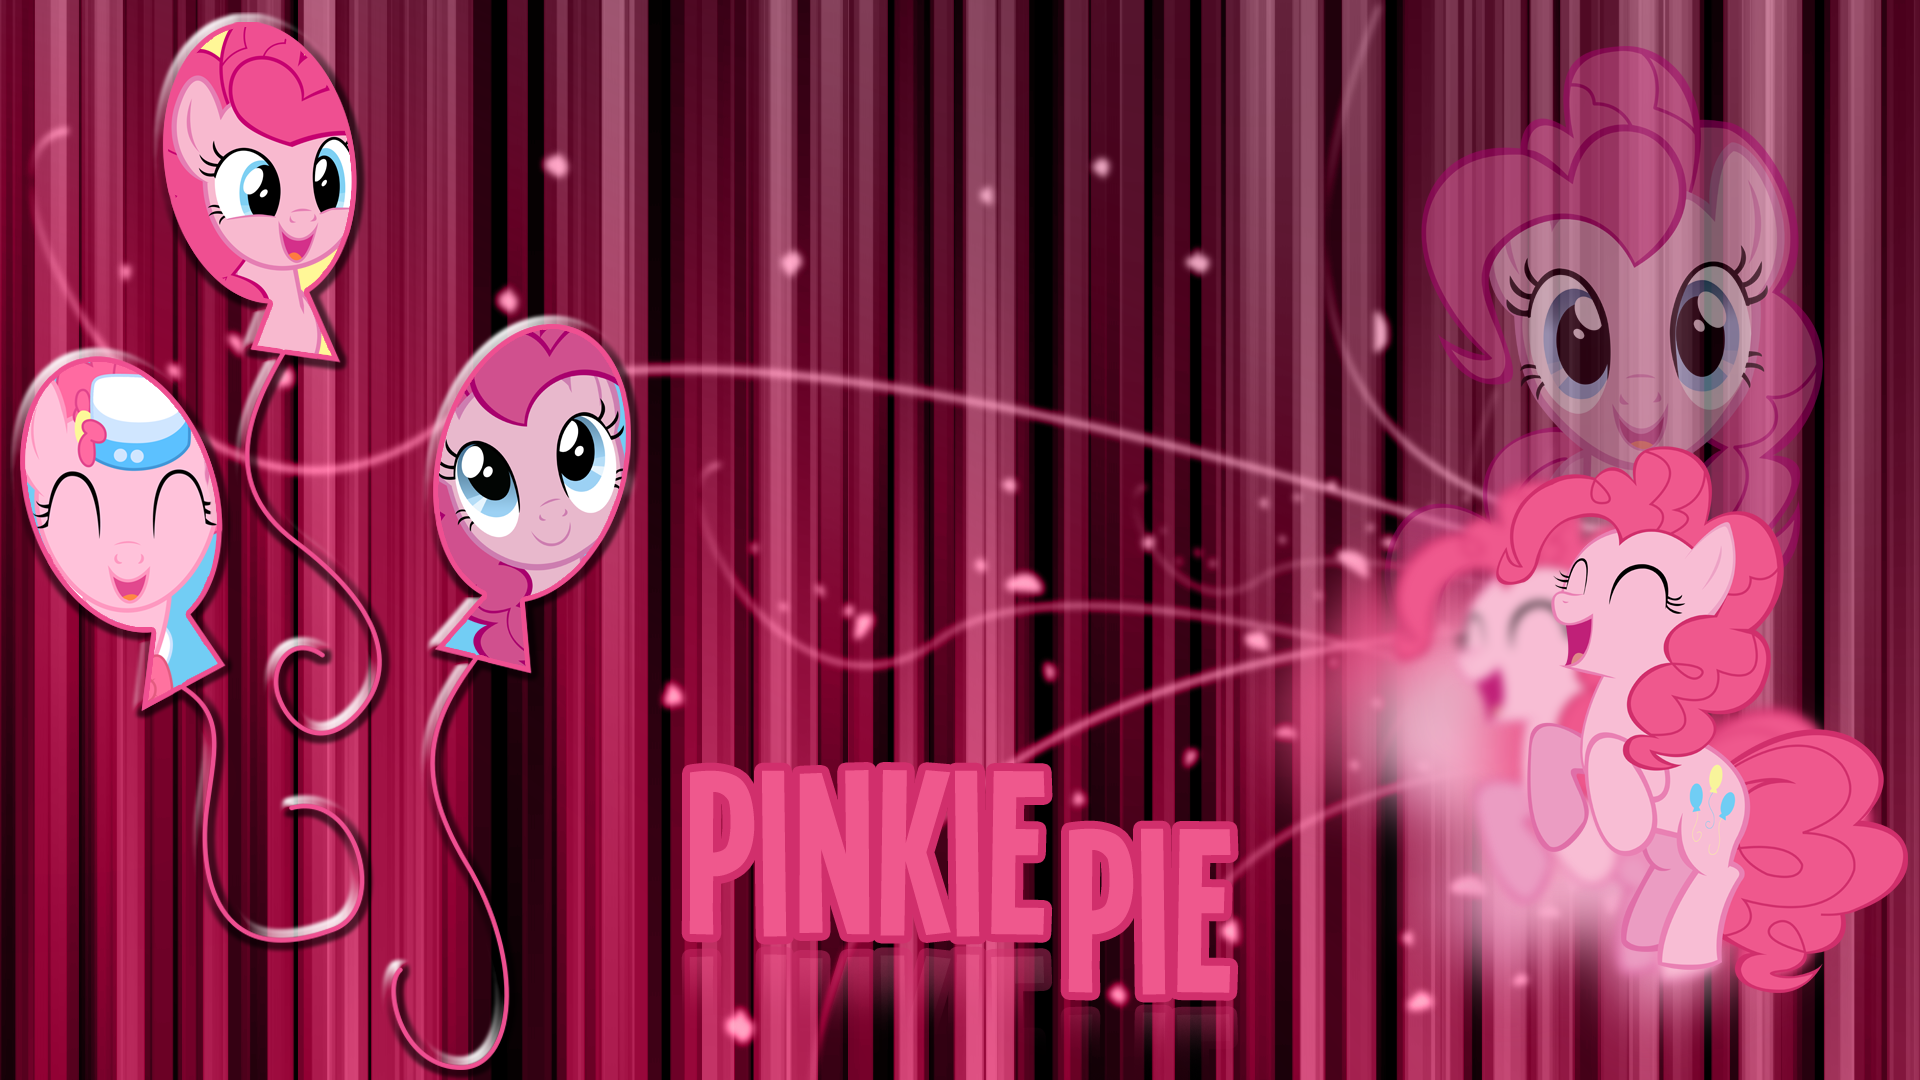 Pinkie Pie 'Abstract Lines' Wallpaper by BlackGryph0n, BlueDragonHans, Felix-KoT, kitsuneymg, Mihaaaa, Orschmann and Peachspices